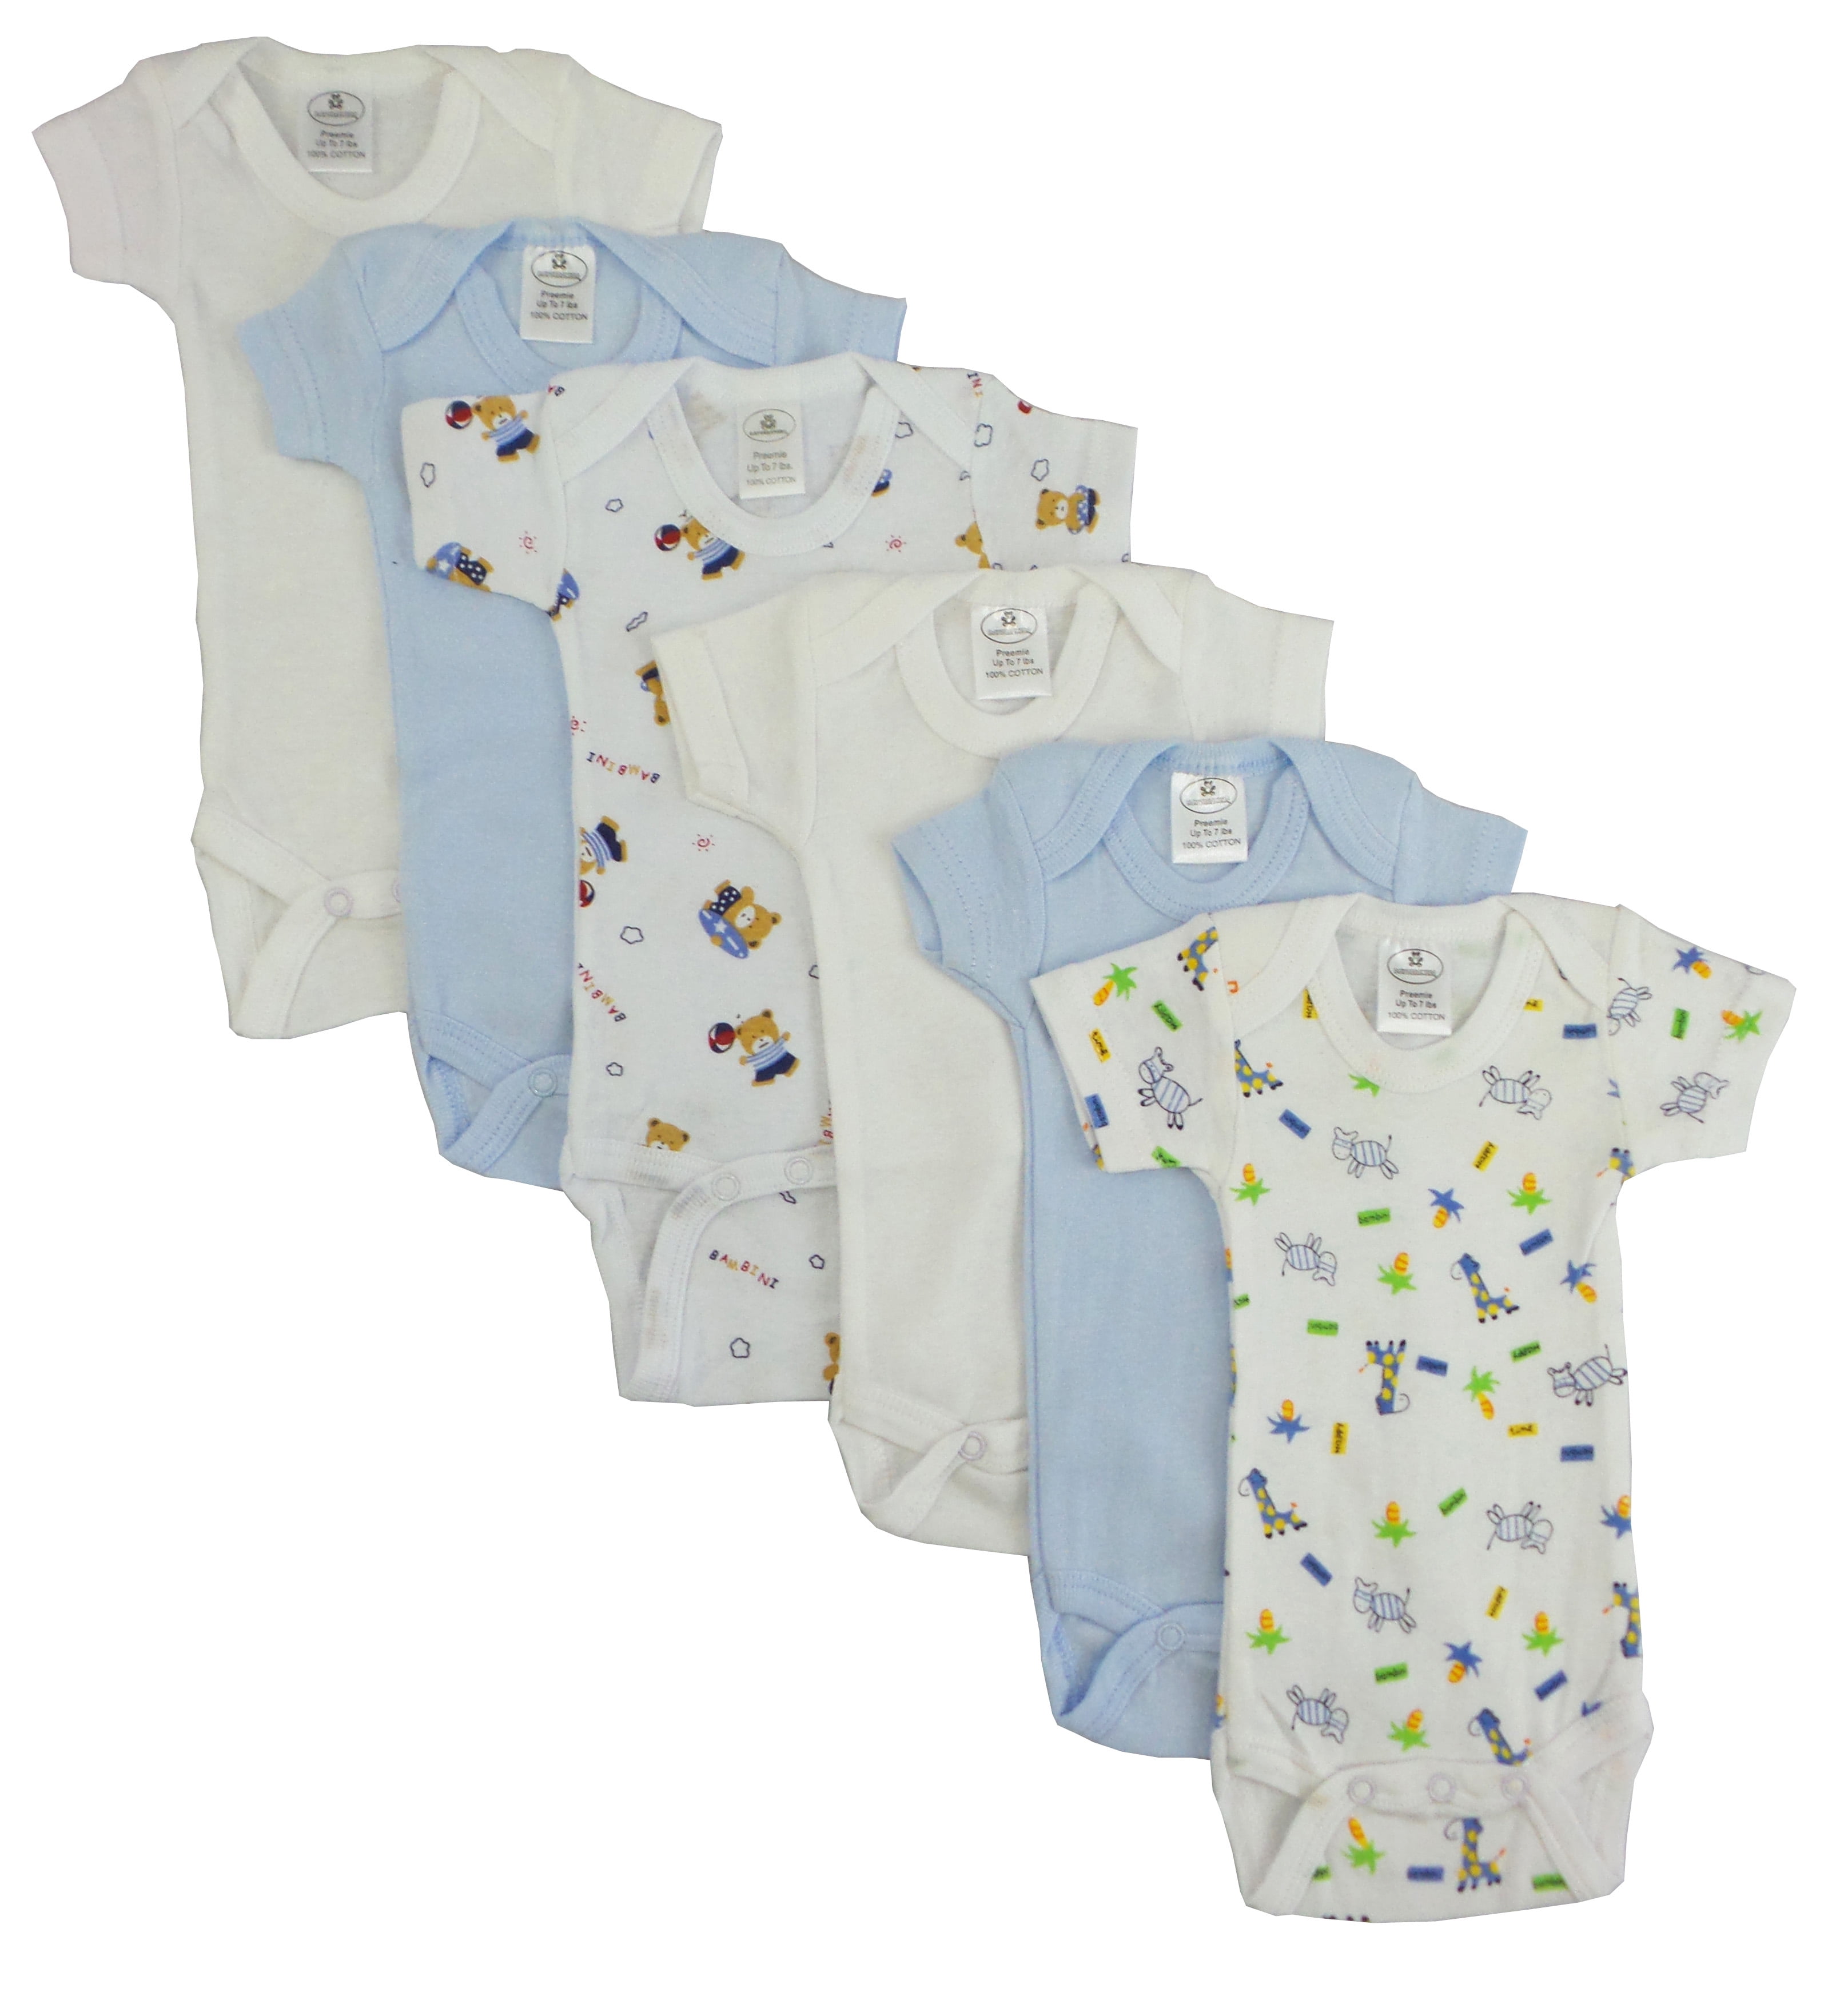 Cs-004nb-004nb Boys Short Sleeve With Printed, White & Blue - Preemie